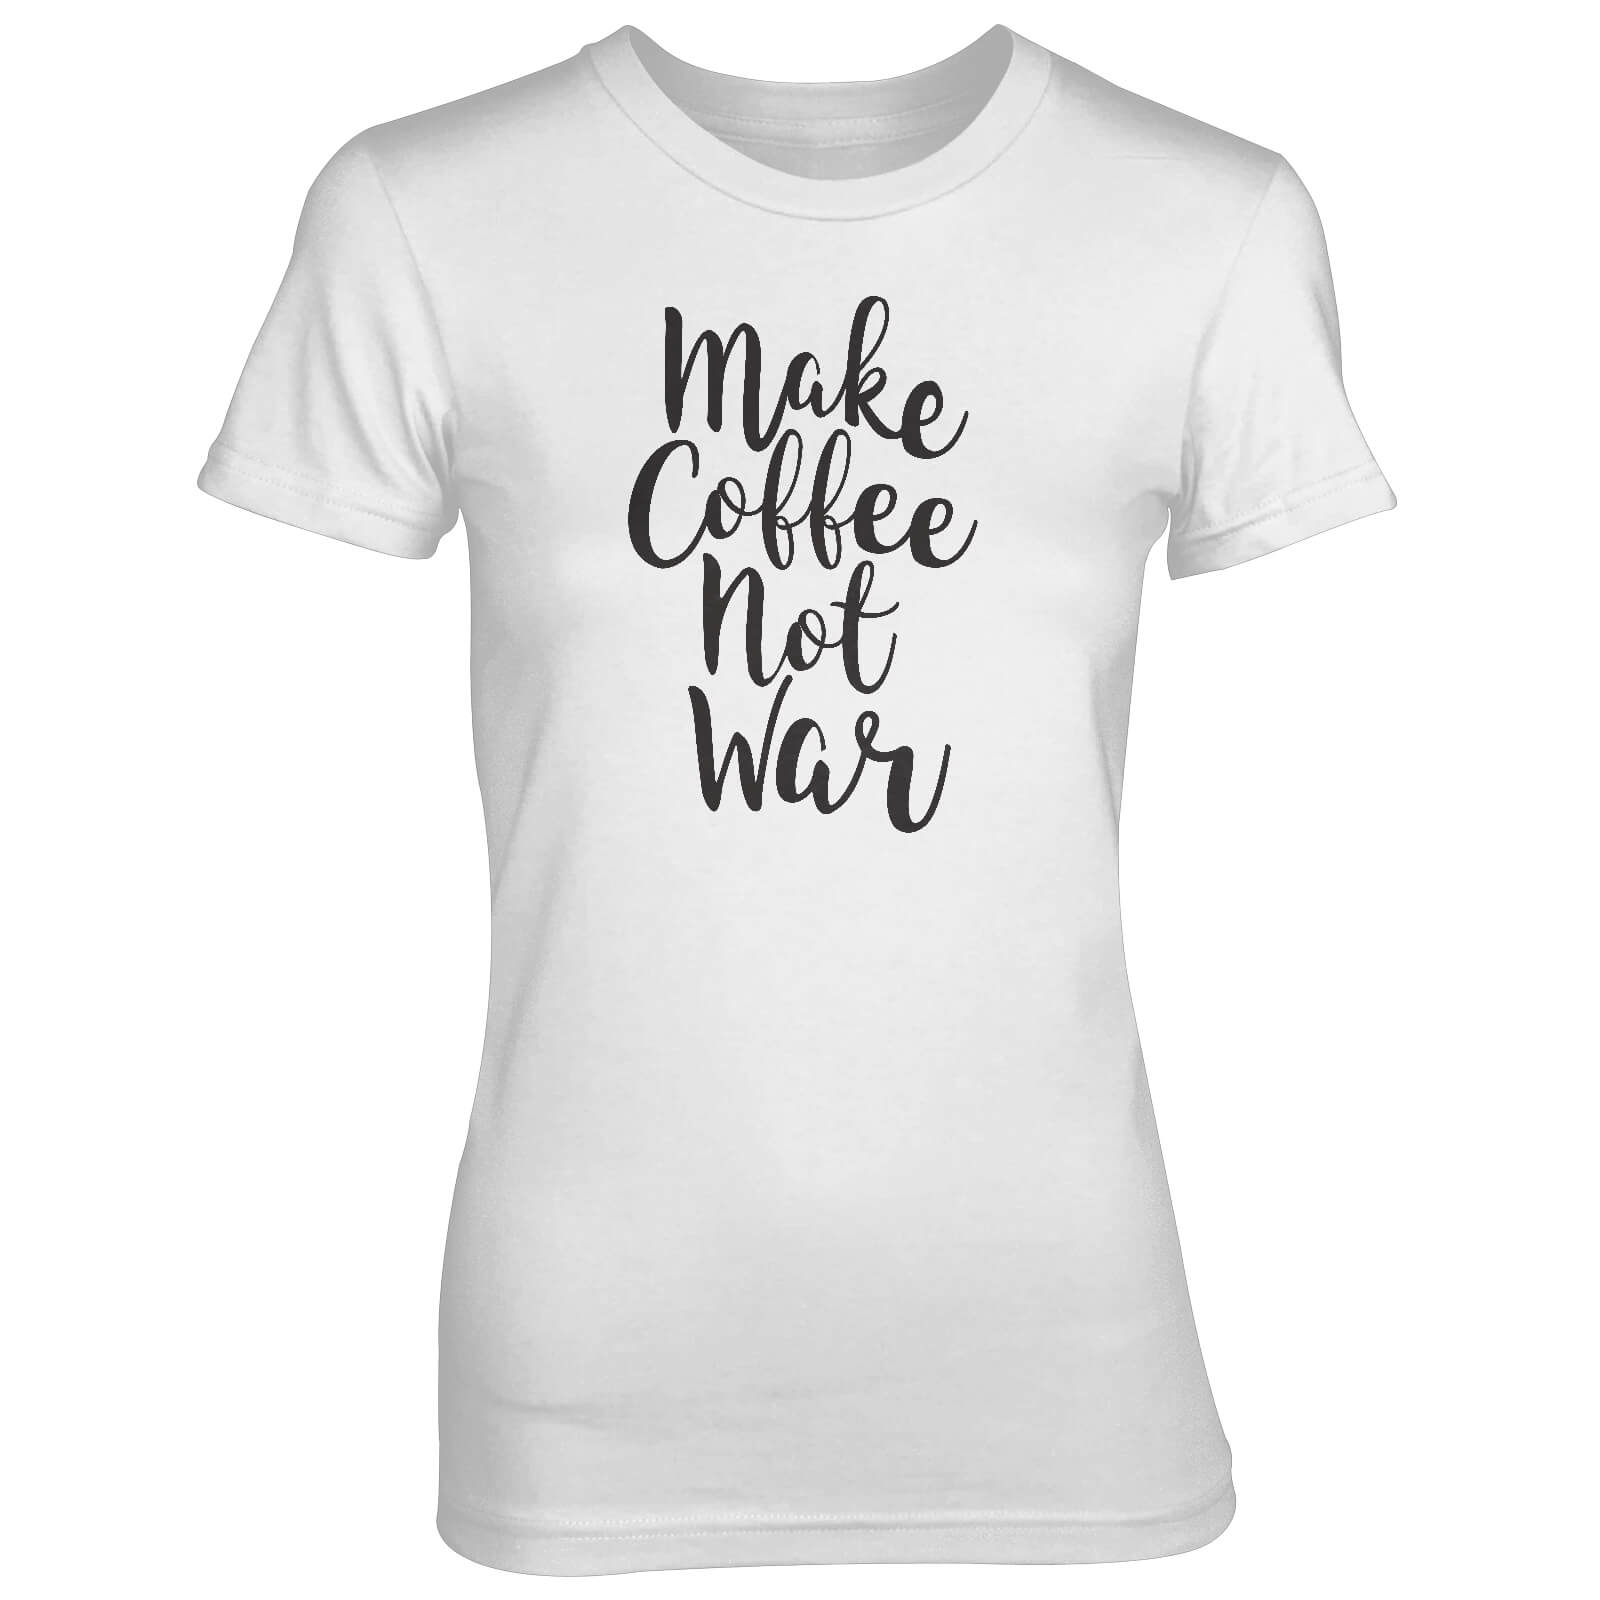 Make Coffee Not War Women's White T-Shirt - S - White